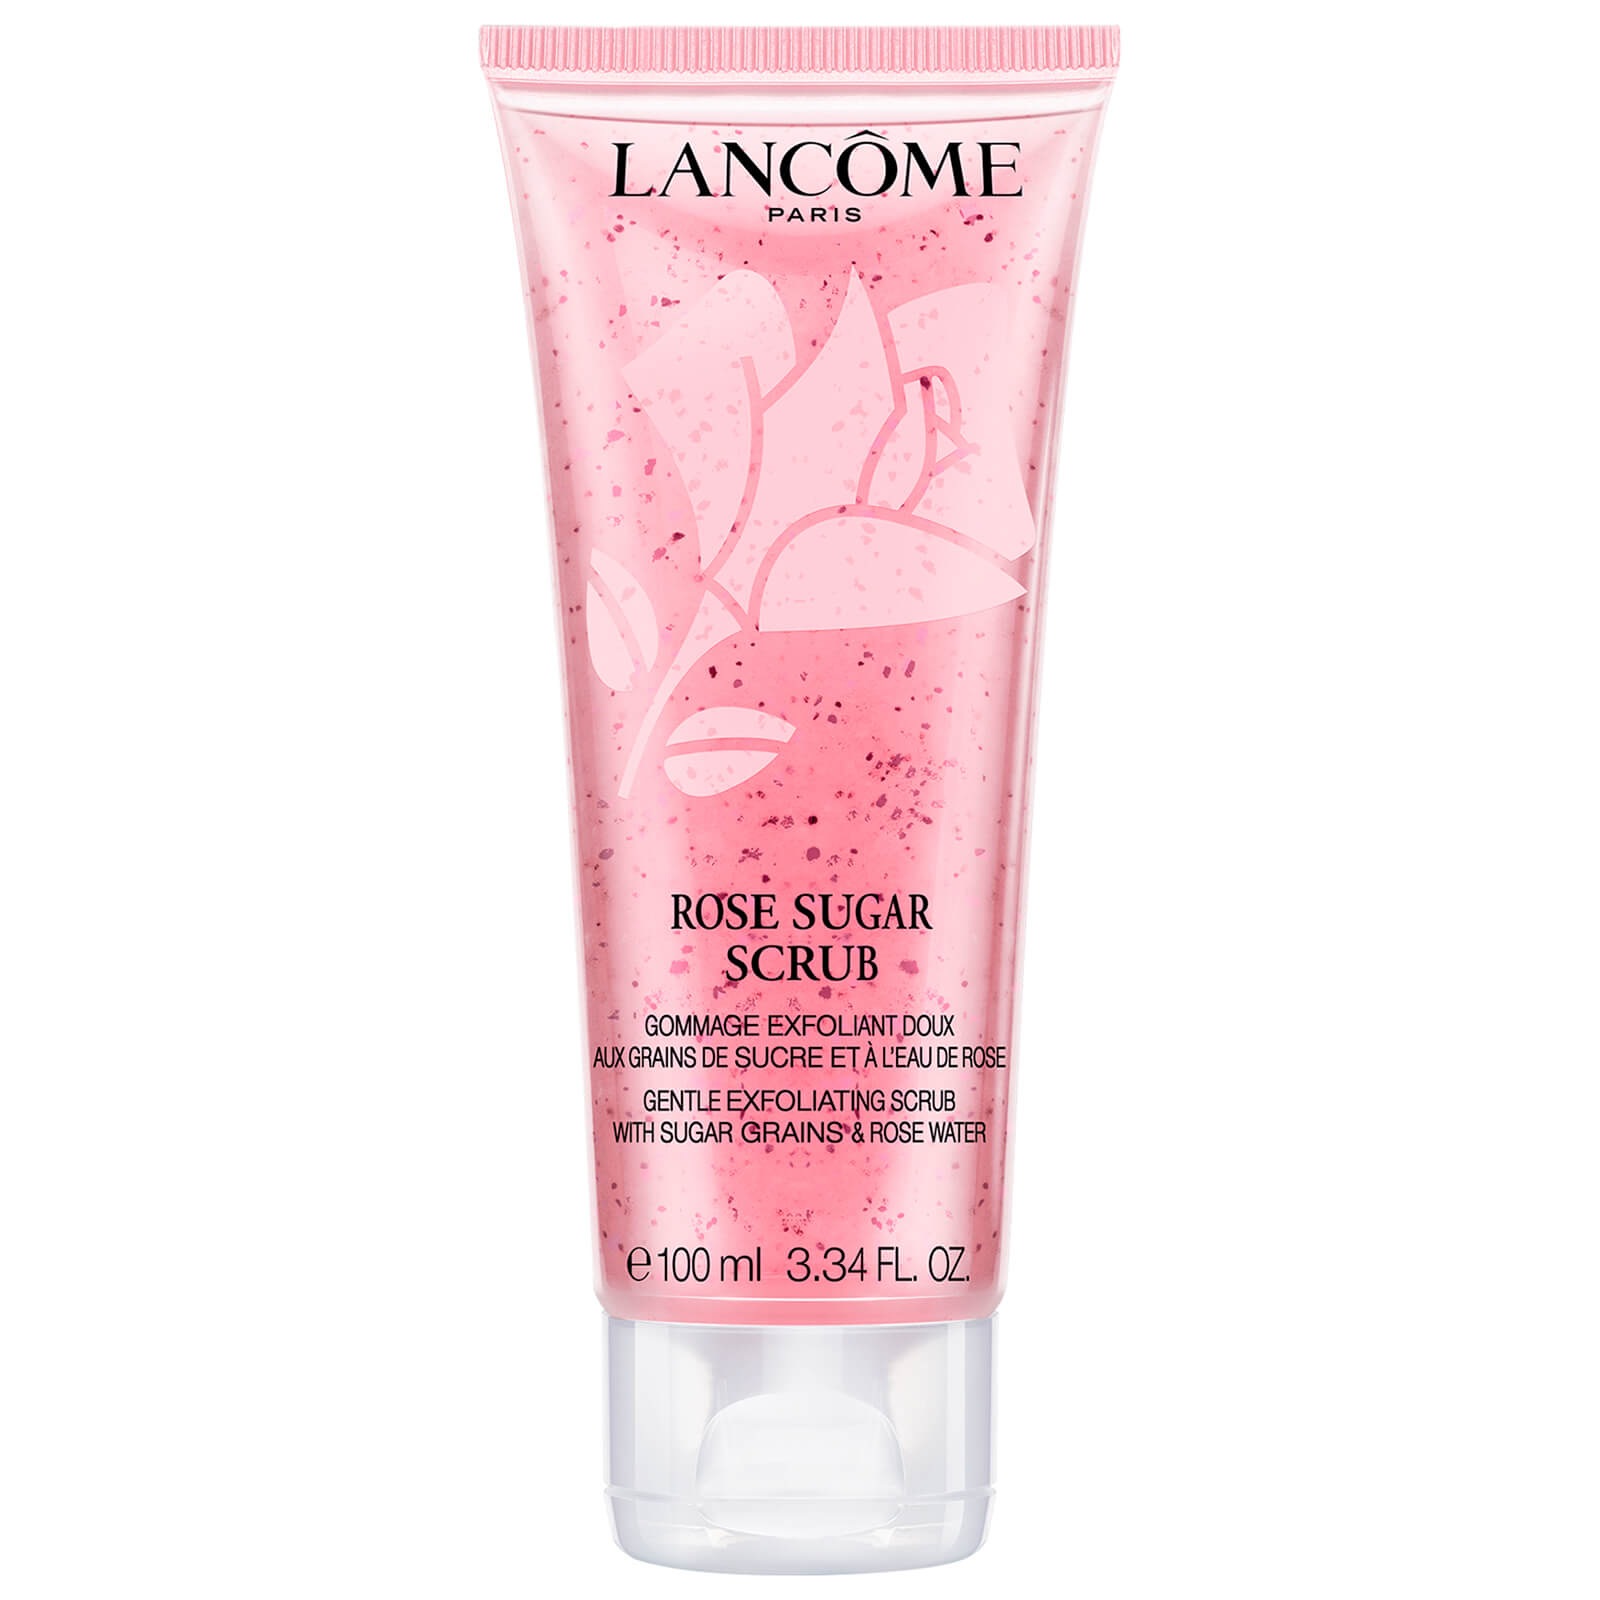 Photos - Facial / Body Cleansing Product Lancome Lancôme Confort Hydrating Gentle Sugar Scrub 100ml L8694100 